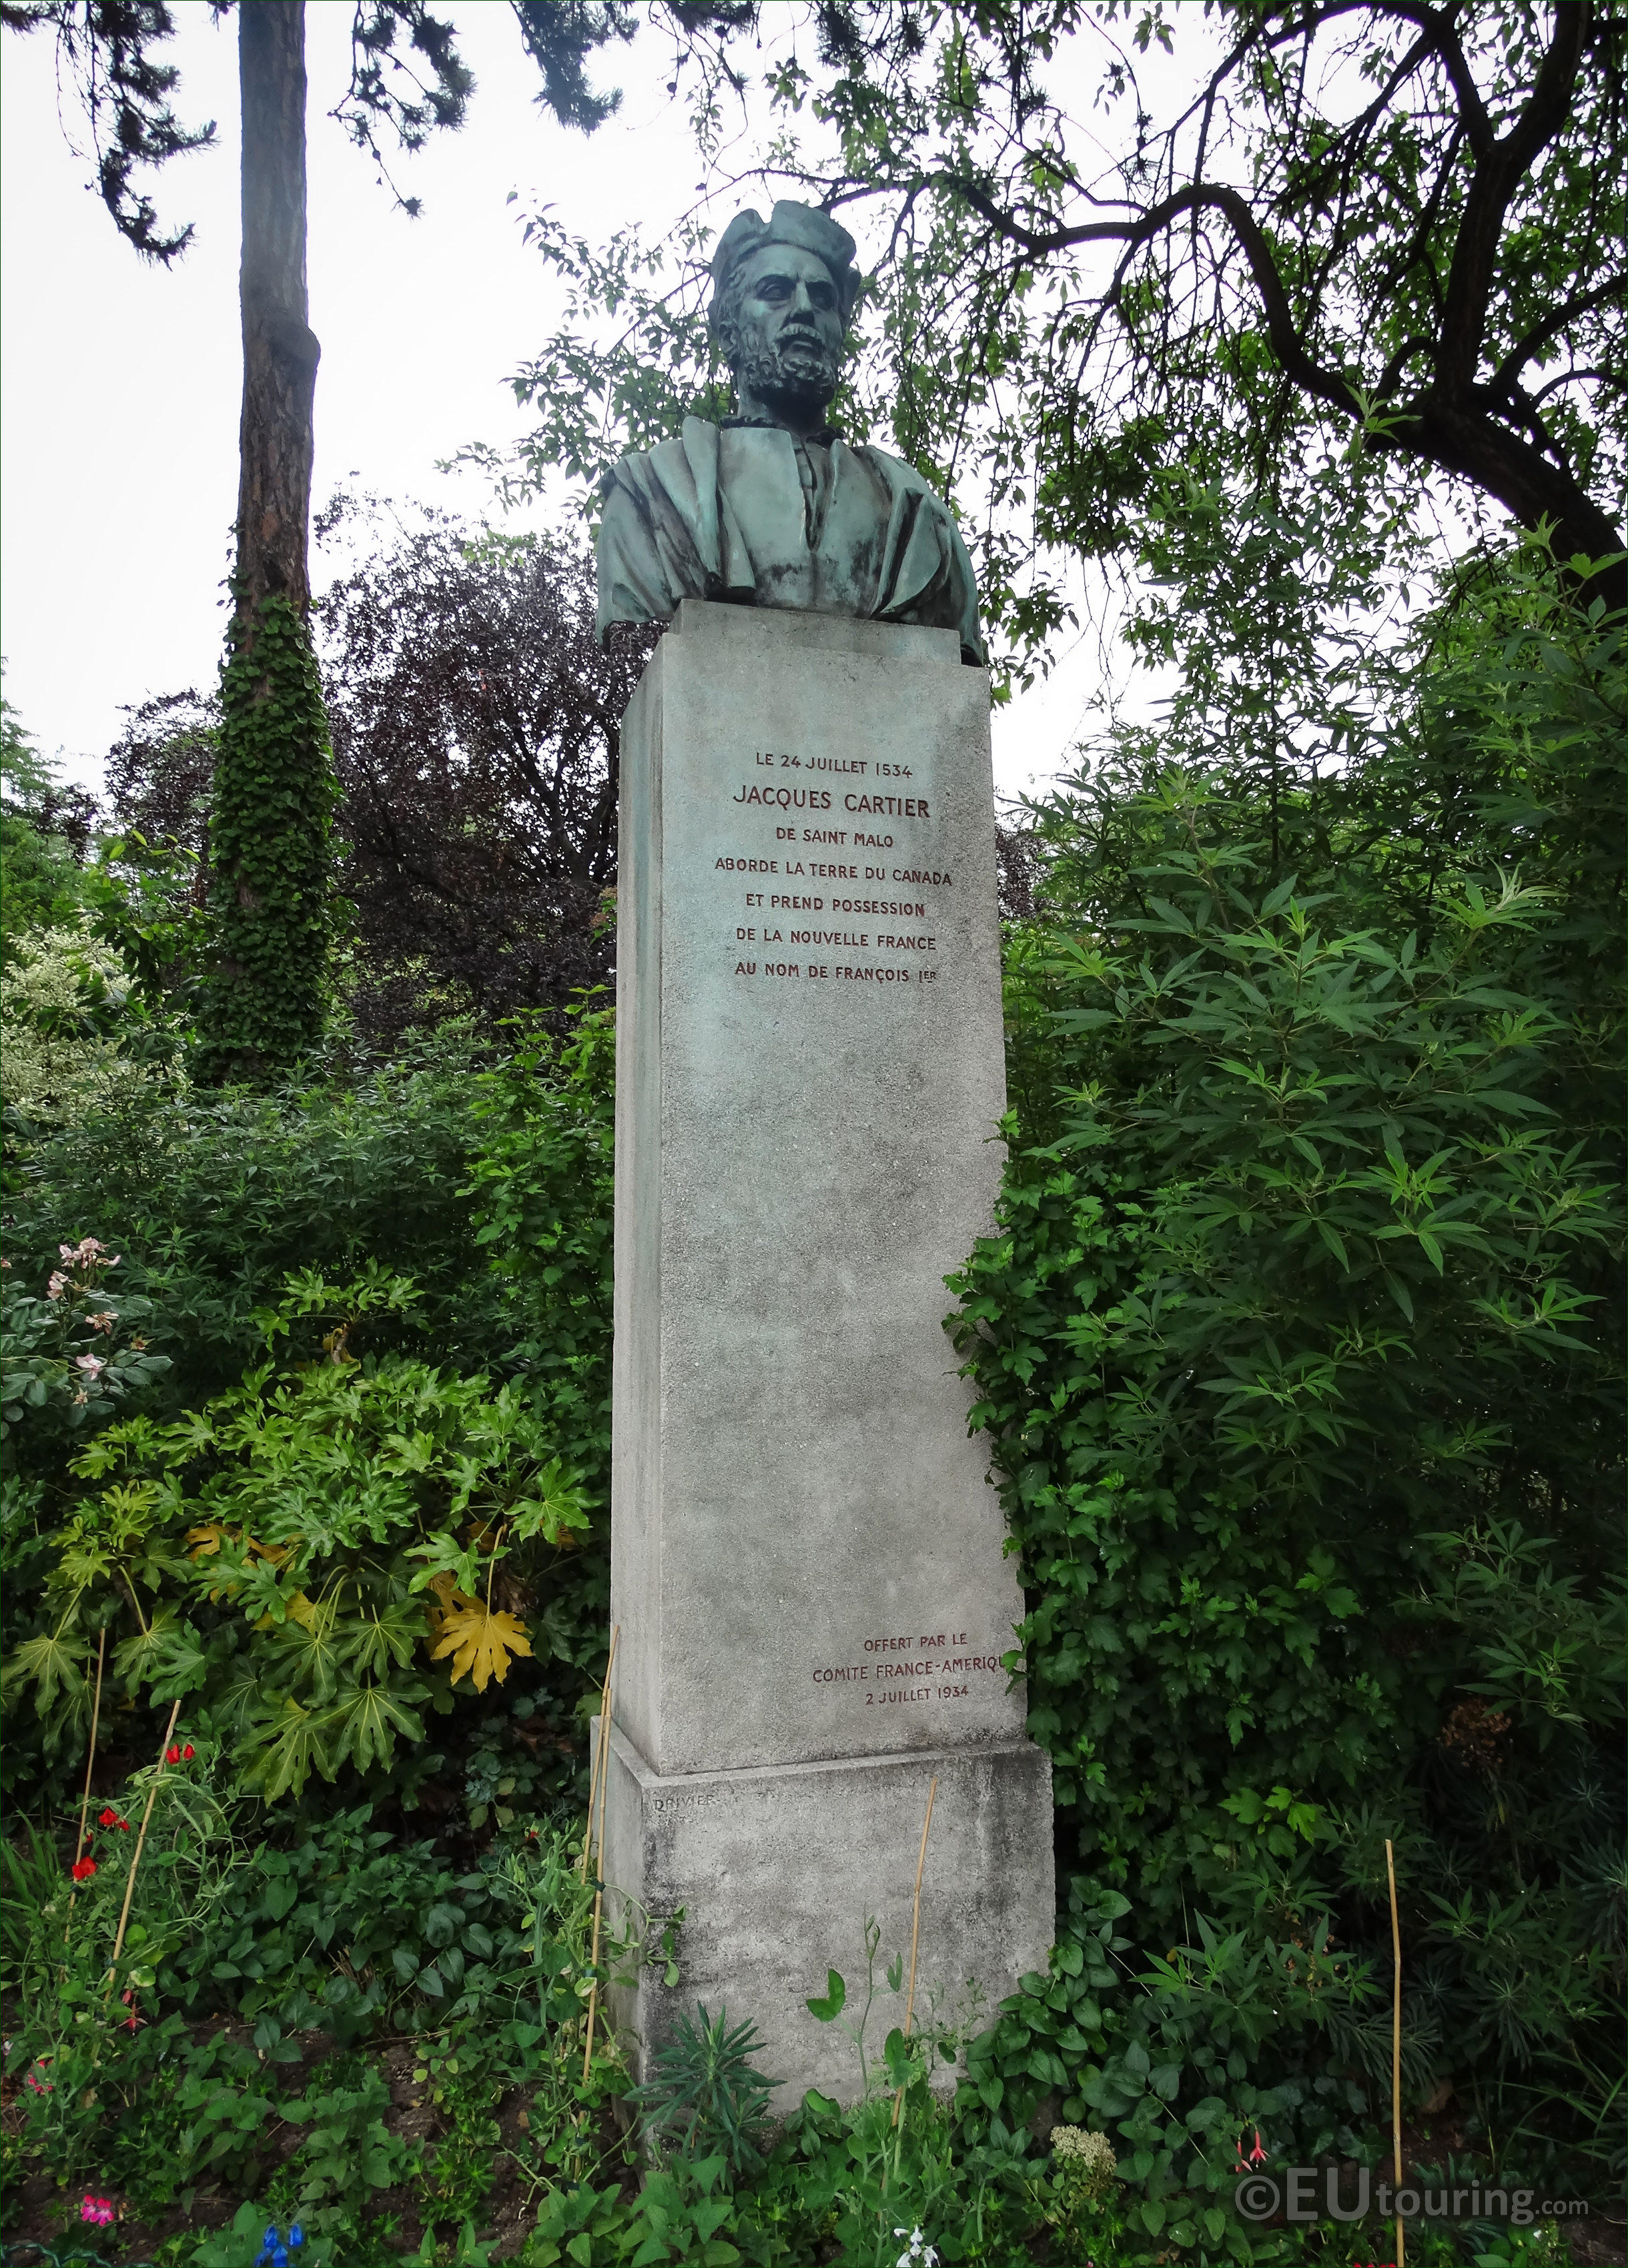 Jacques Cartier statue by Leon Drivier 